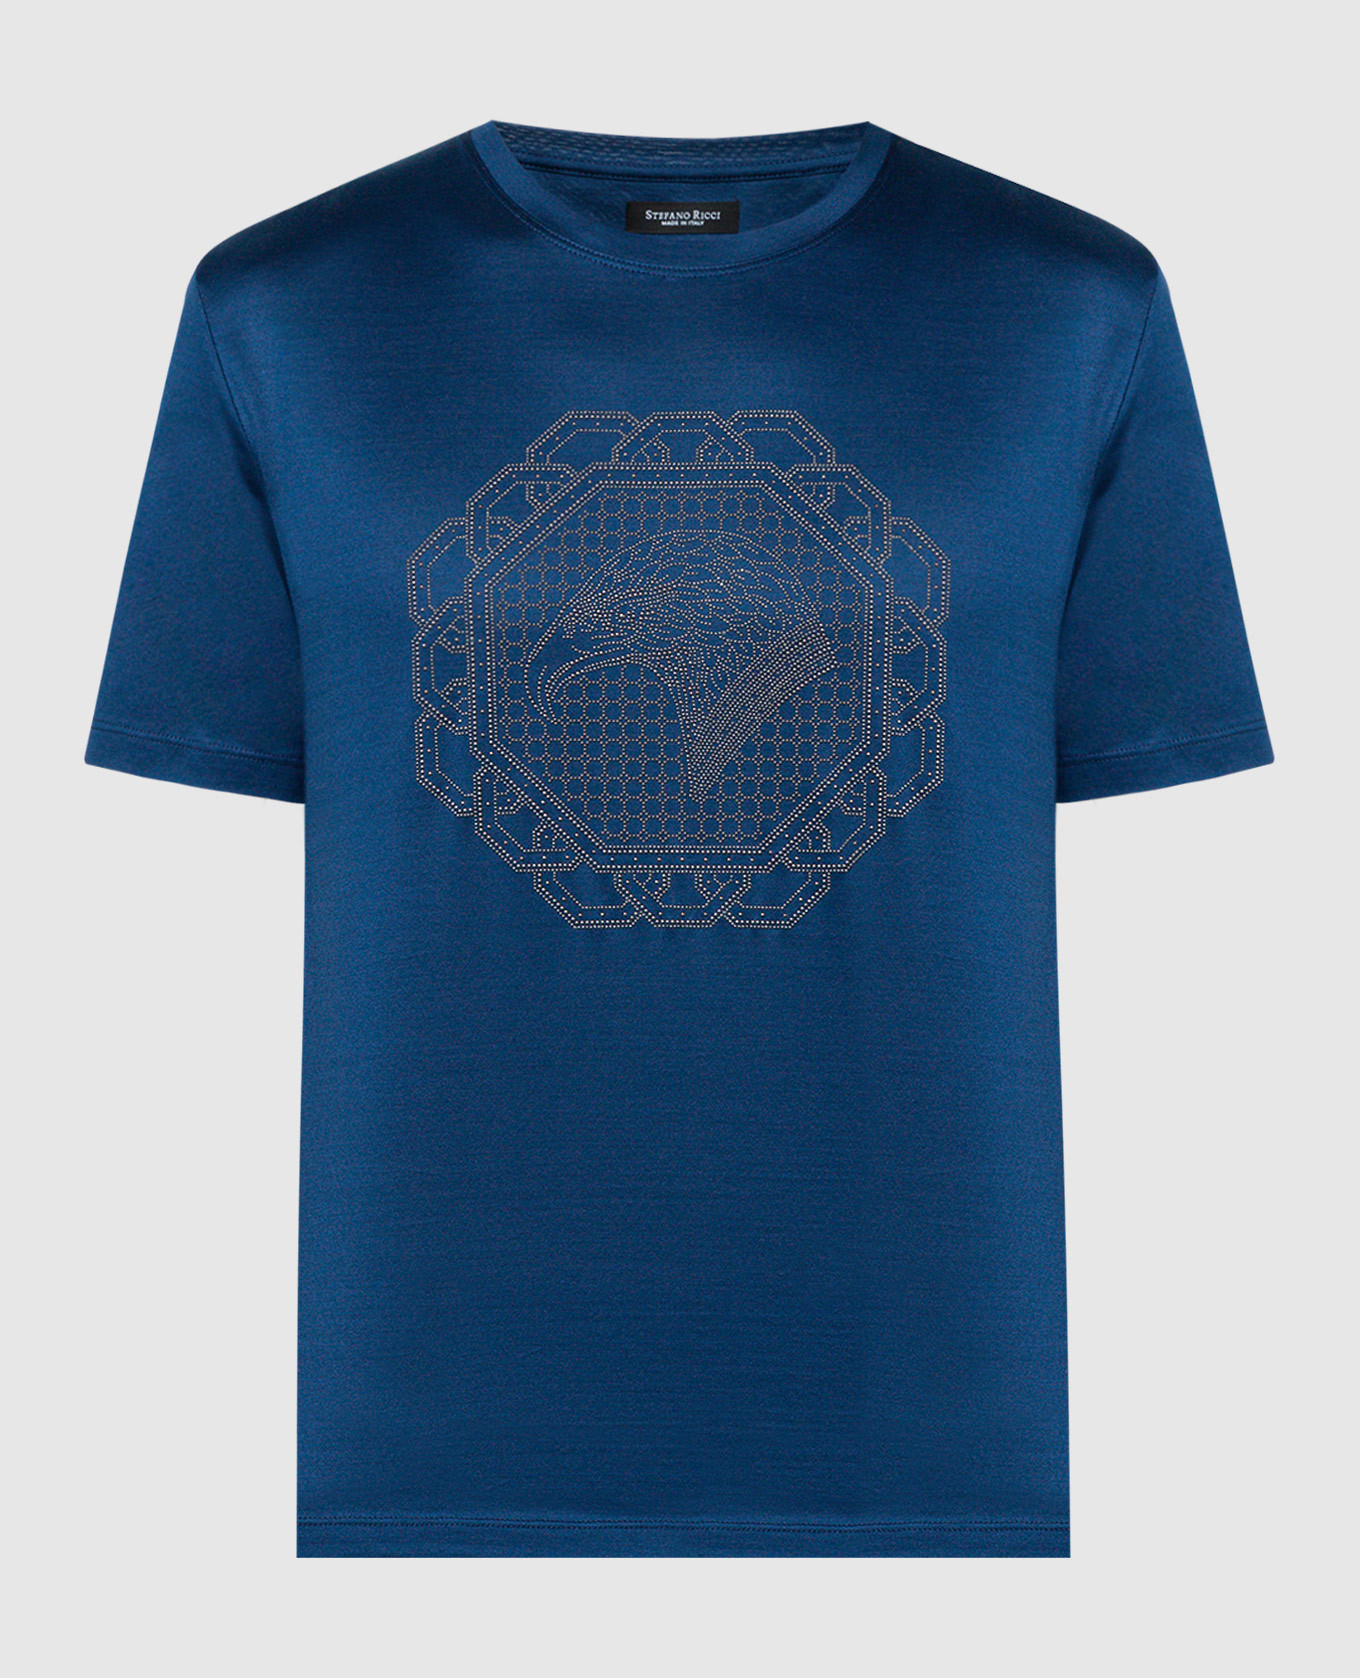 Blue t-shirt with logo emblem